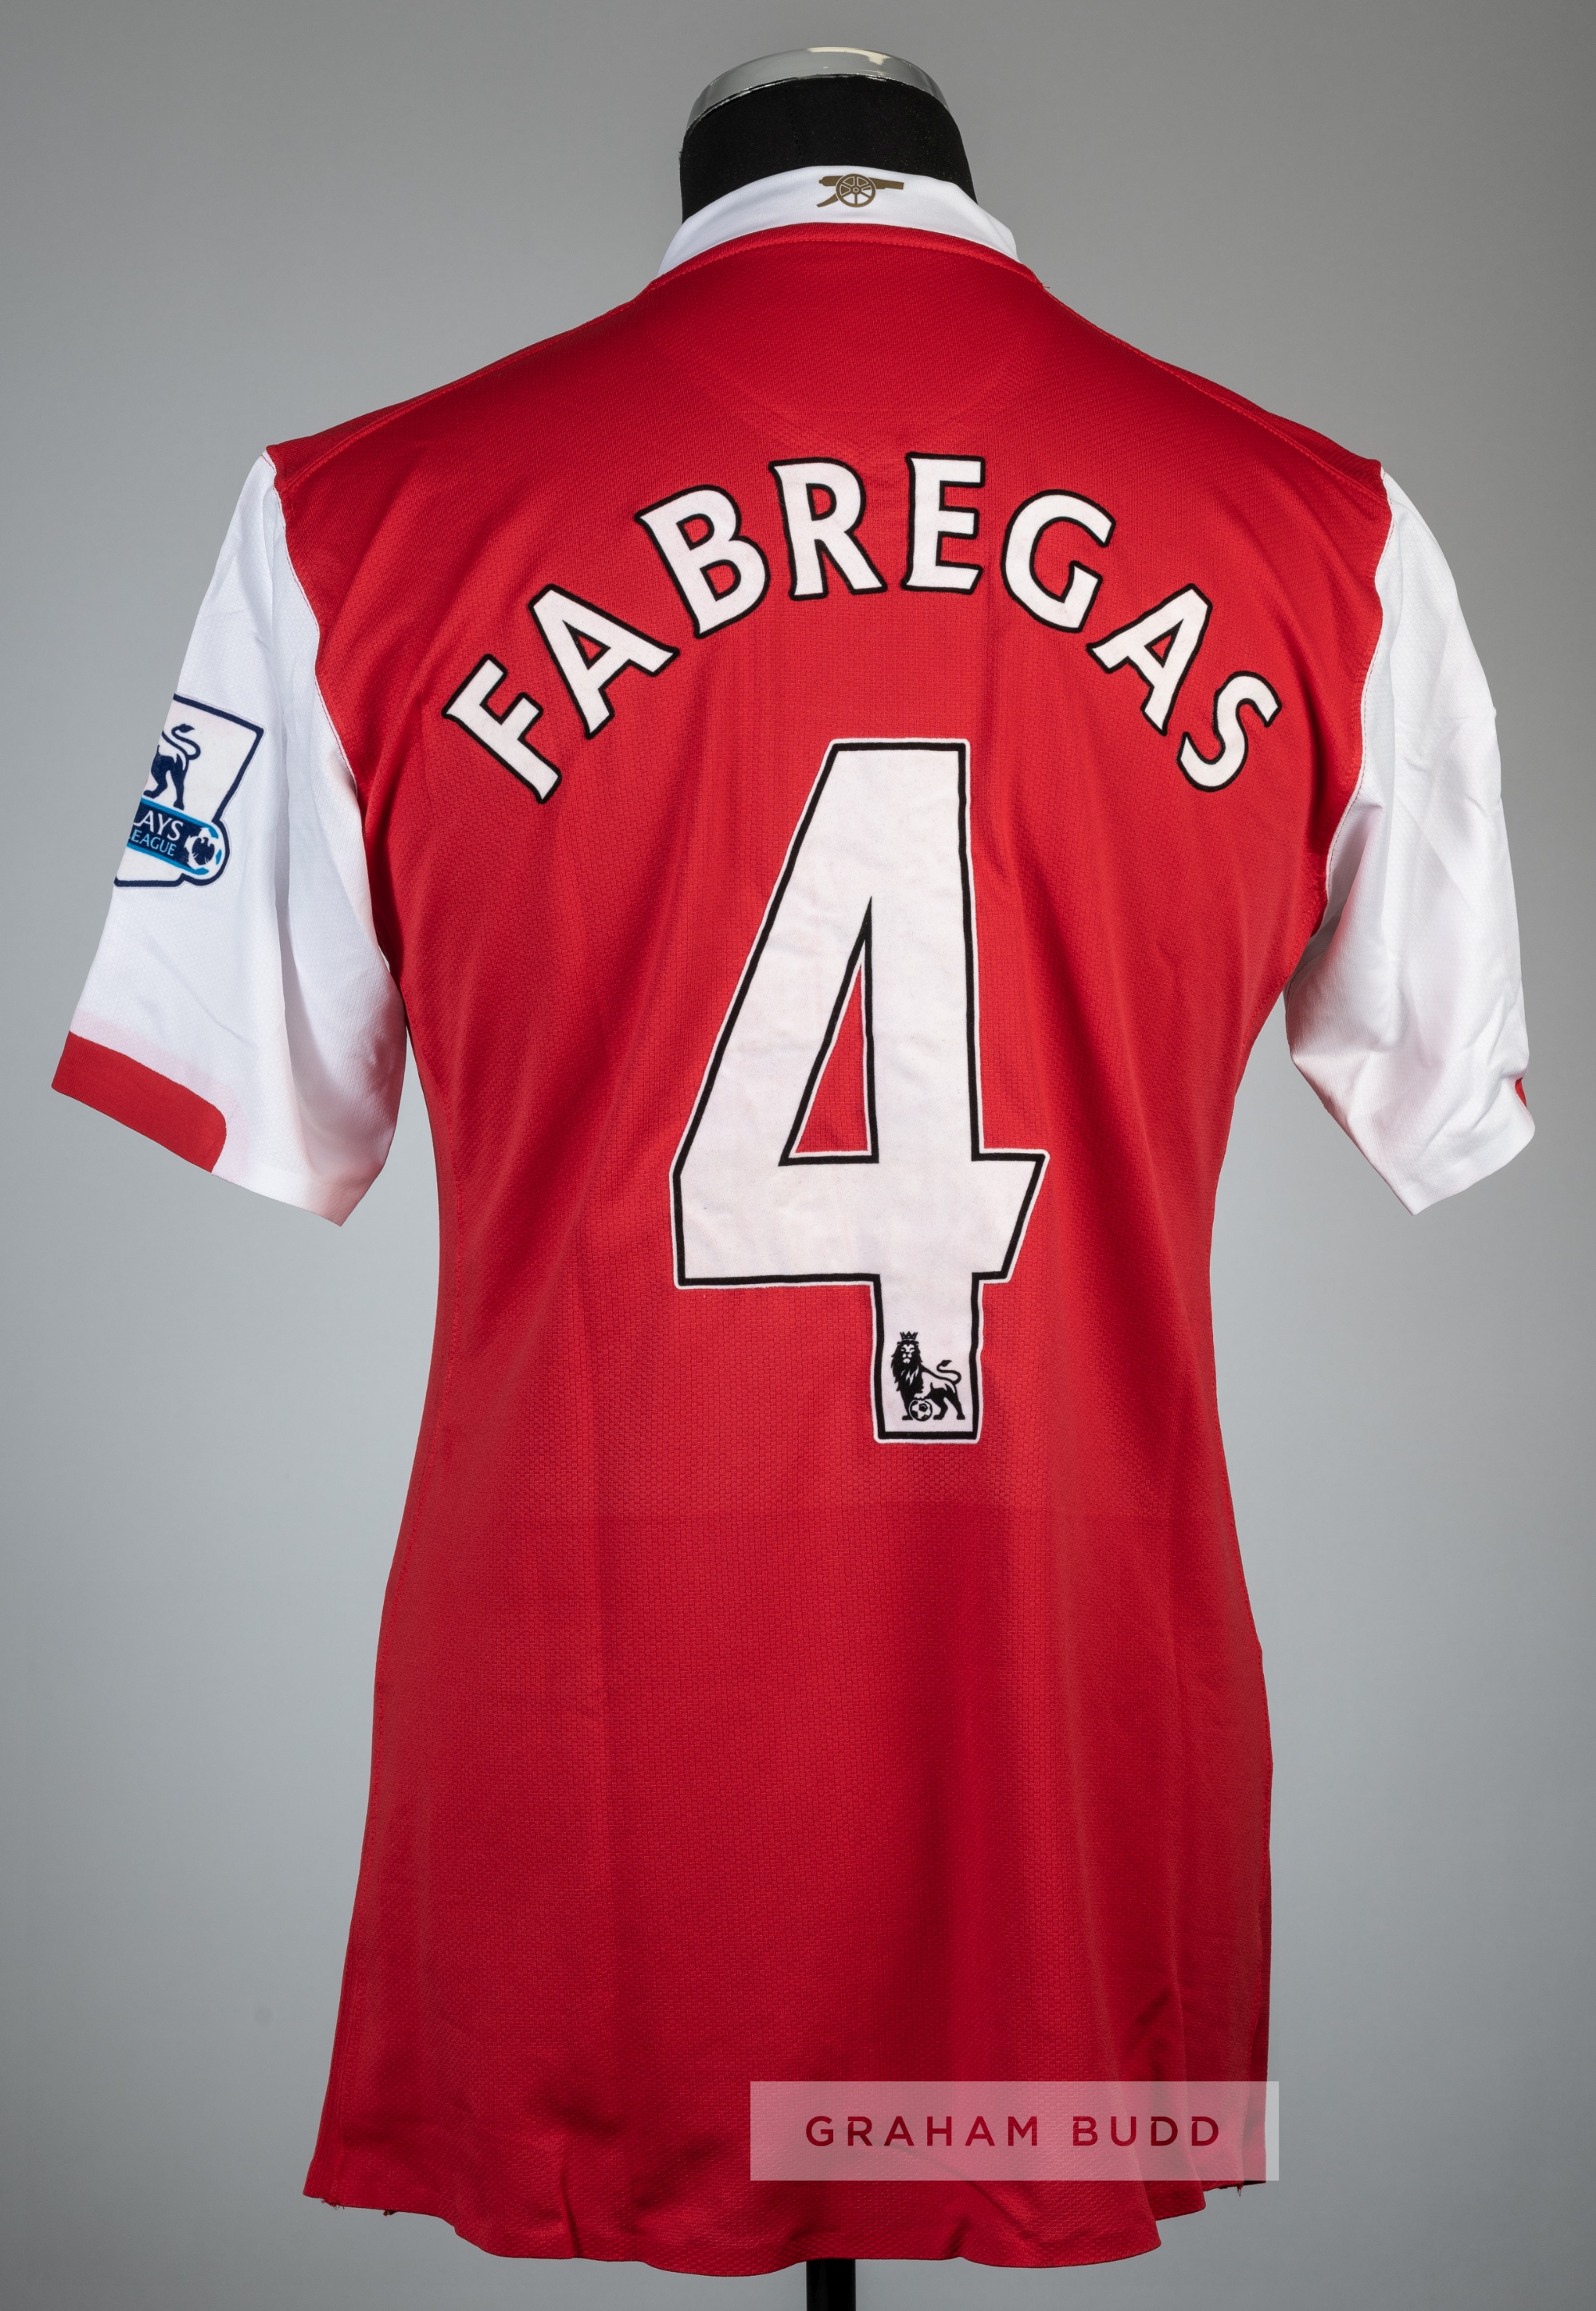 Cesc Fabregas red Arsenal no.4 jersey v Tottenham Hotspur, played at White Hart Lane, 15th September - Image 2 of 2